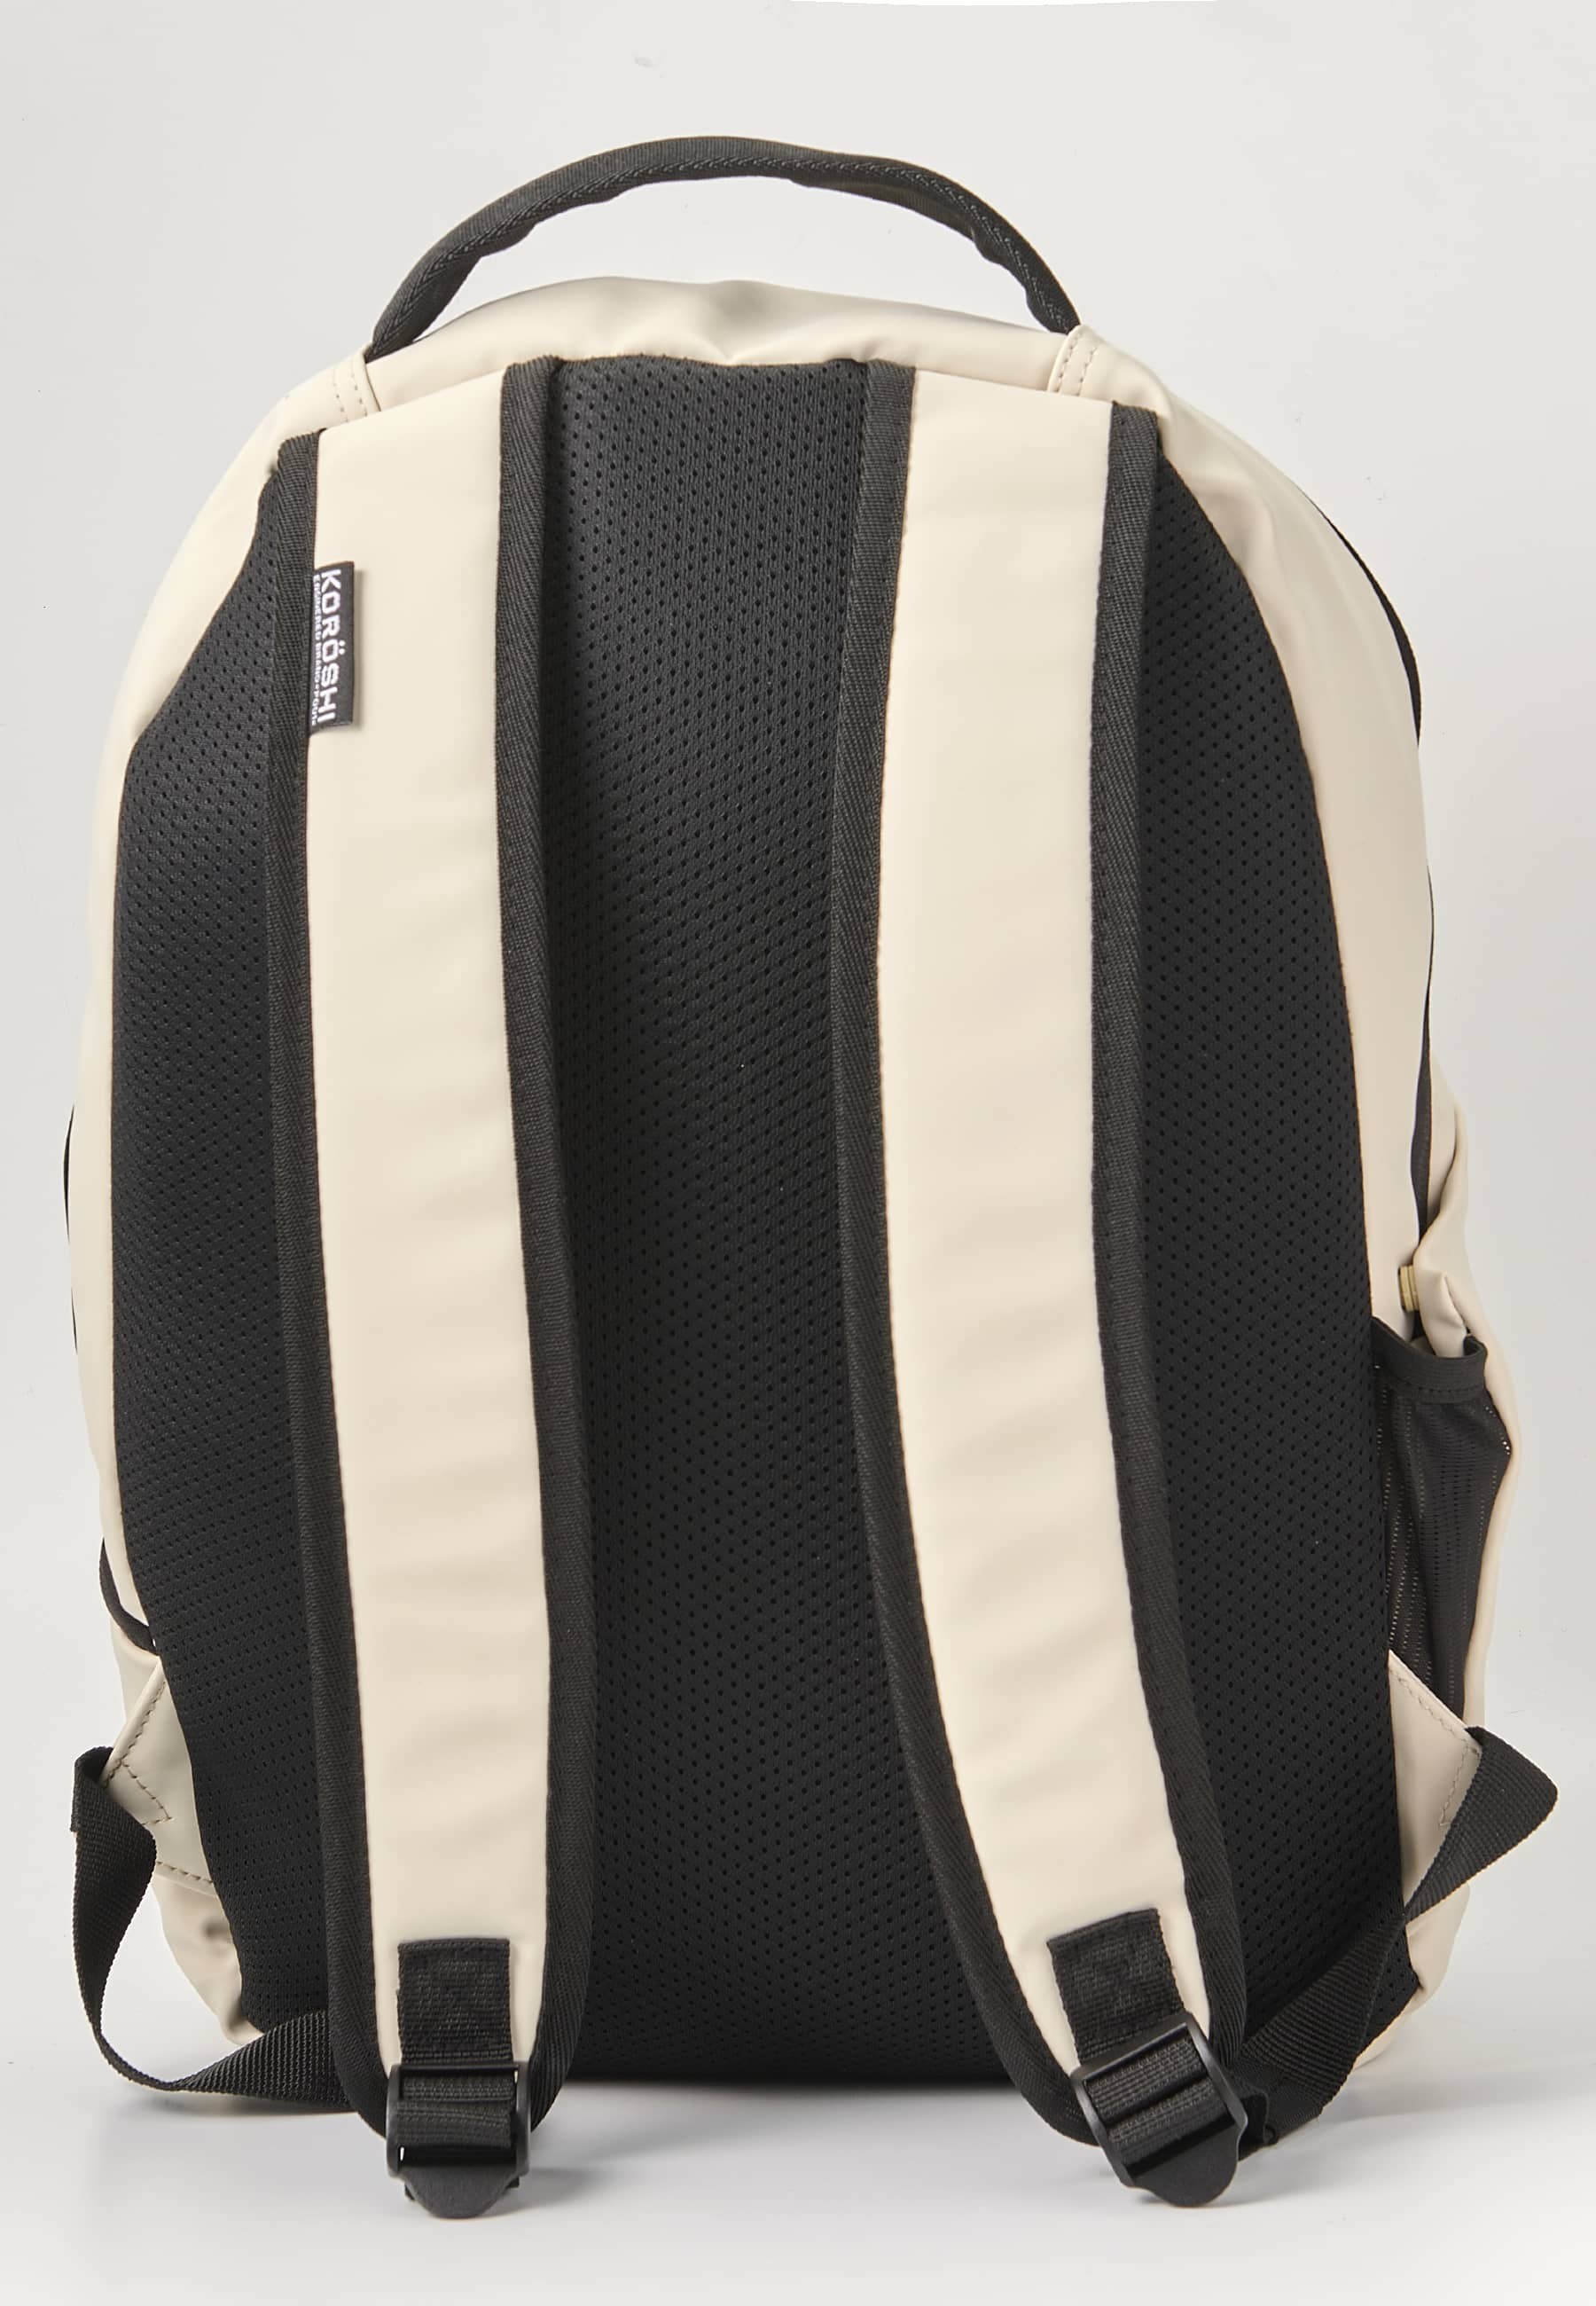 Koröshi Backpack with zipper closure and interior laptop pocket in Ecru color